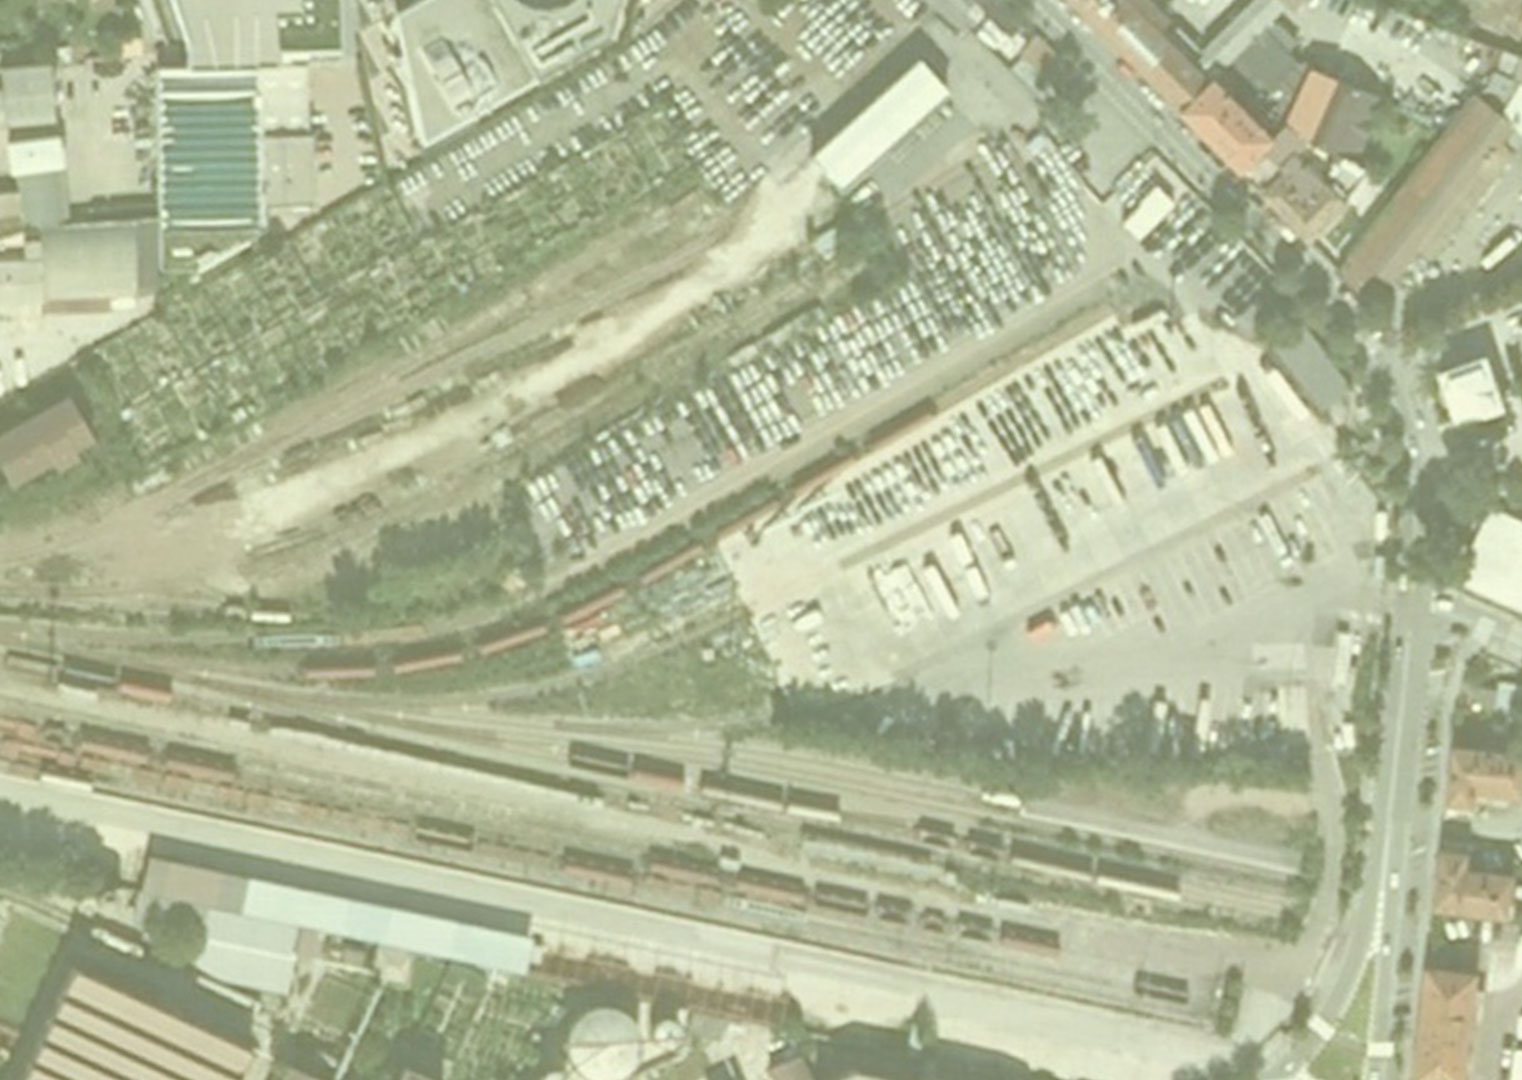 satelite image of the area 2008 http://geokatalog.buergernetz.bz.it/geokatalog/